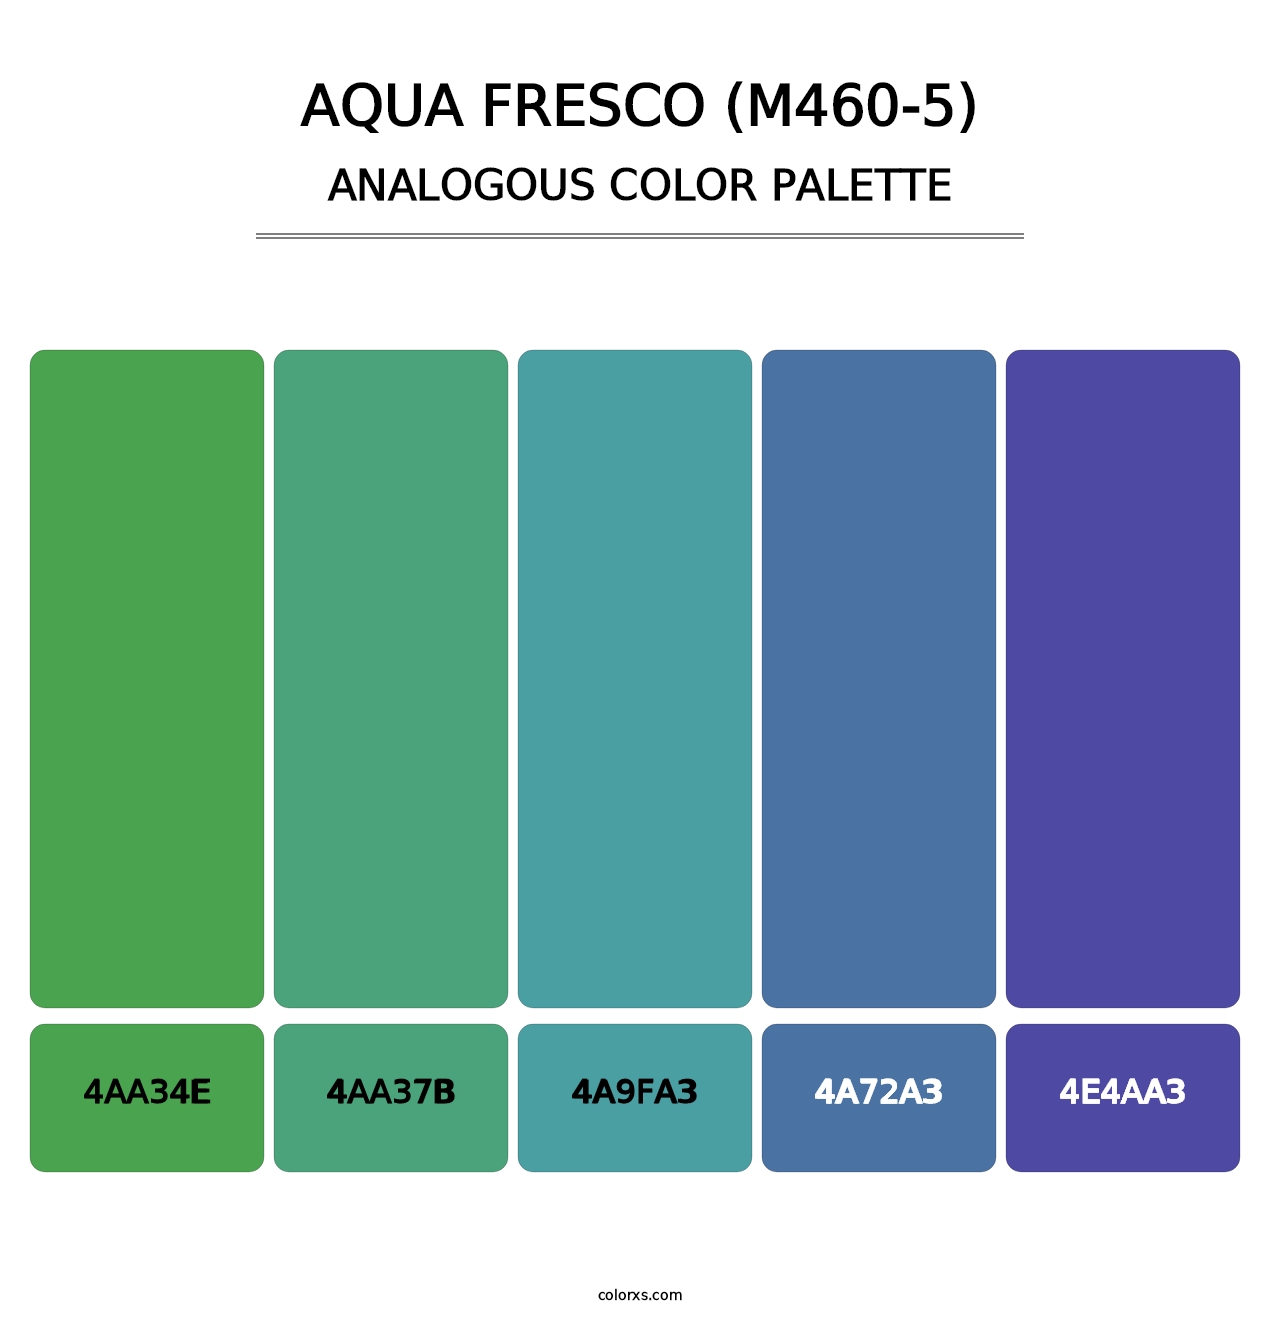 Aqua Fresco (M460-5) - Analogous Color Palette